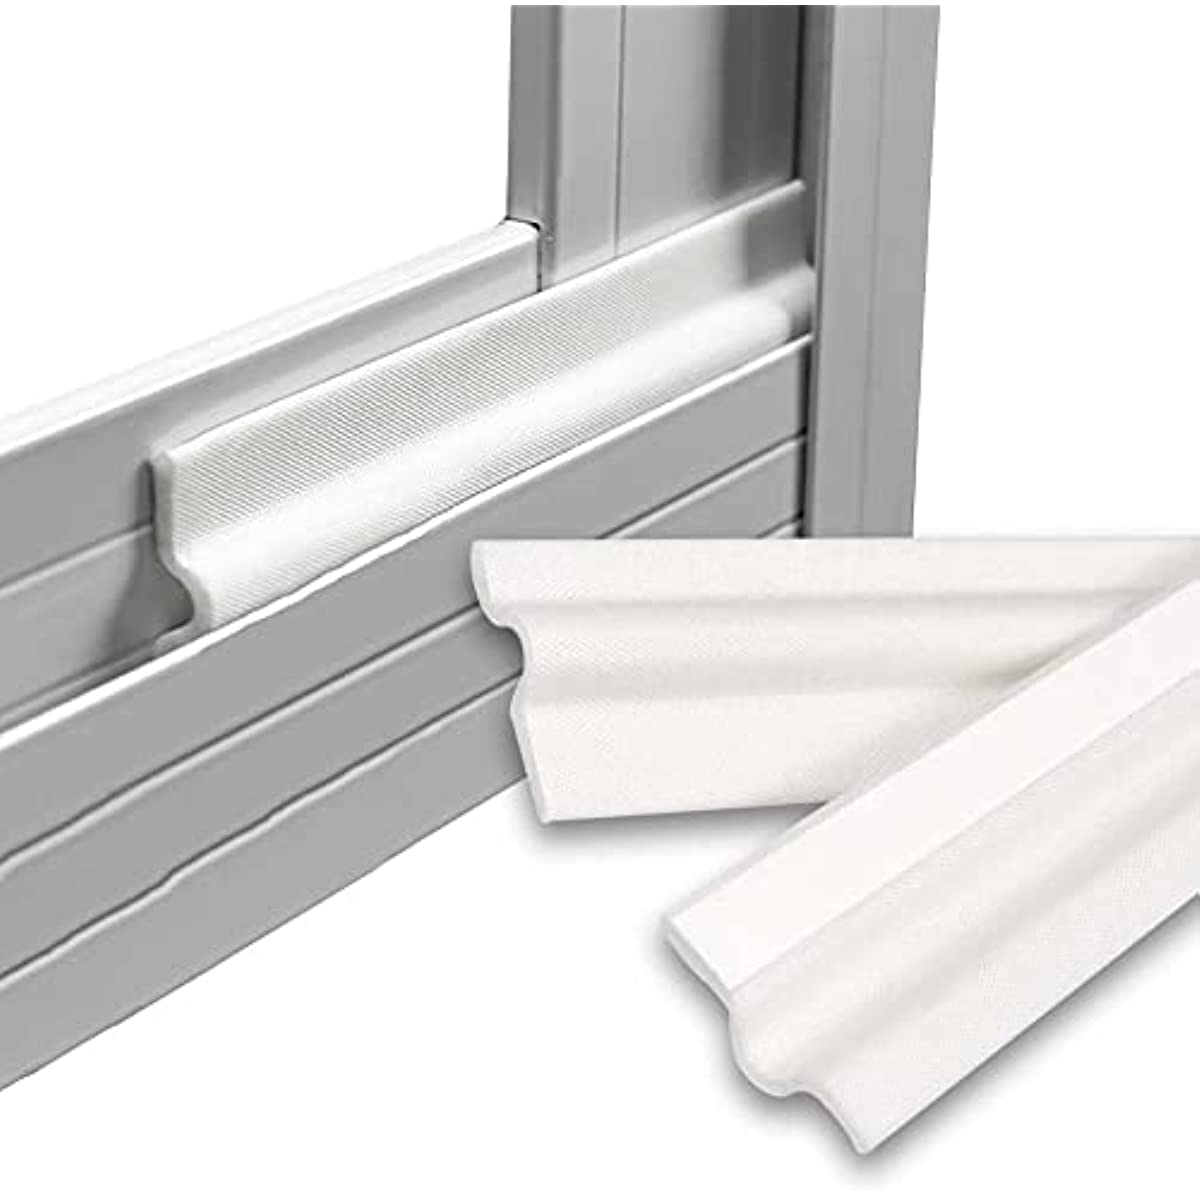 118 inch Weather Stripping Door Seal Strip for Bottom of Door,Self-Adhesive Window Draft Stopper Foam Seal Strip,Soundproof Window Insulation